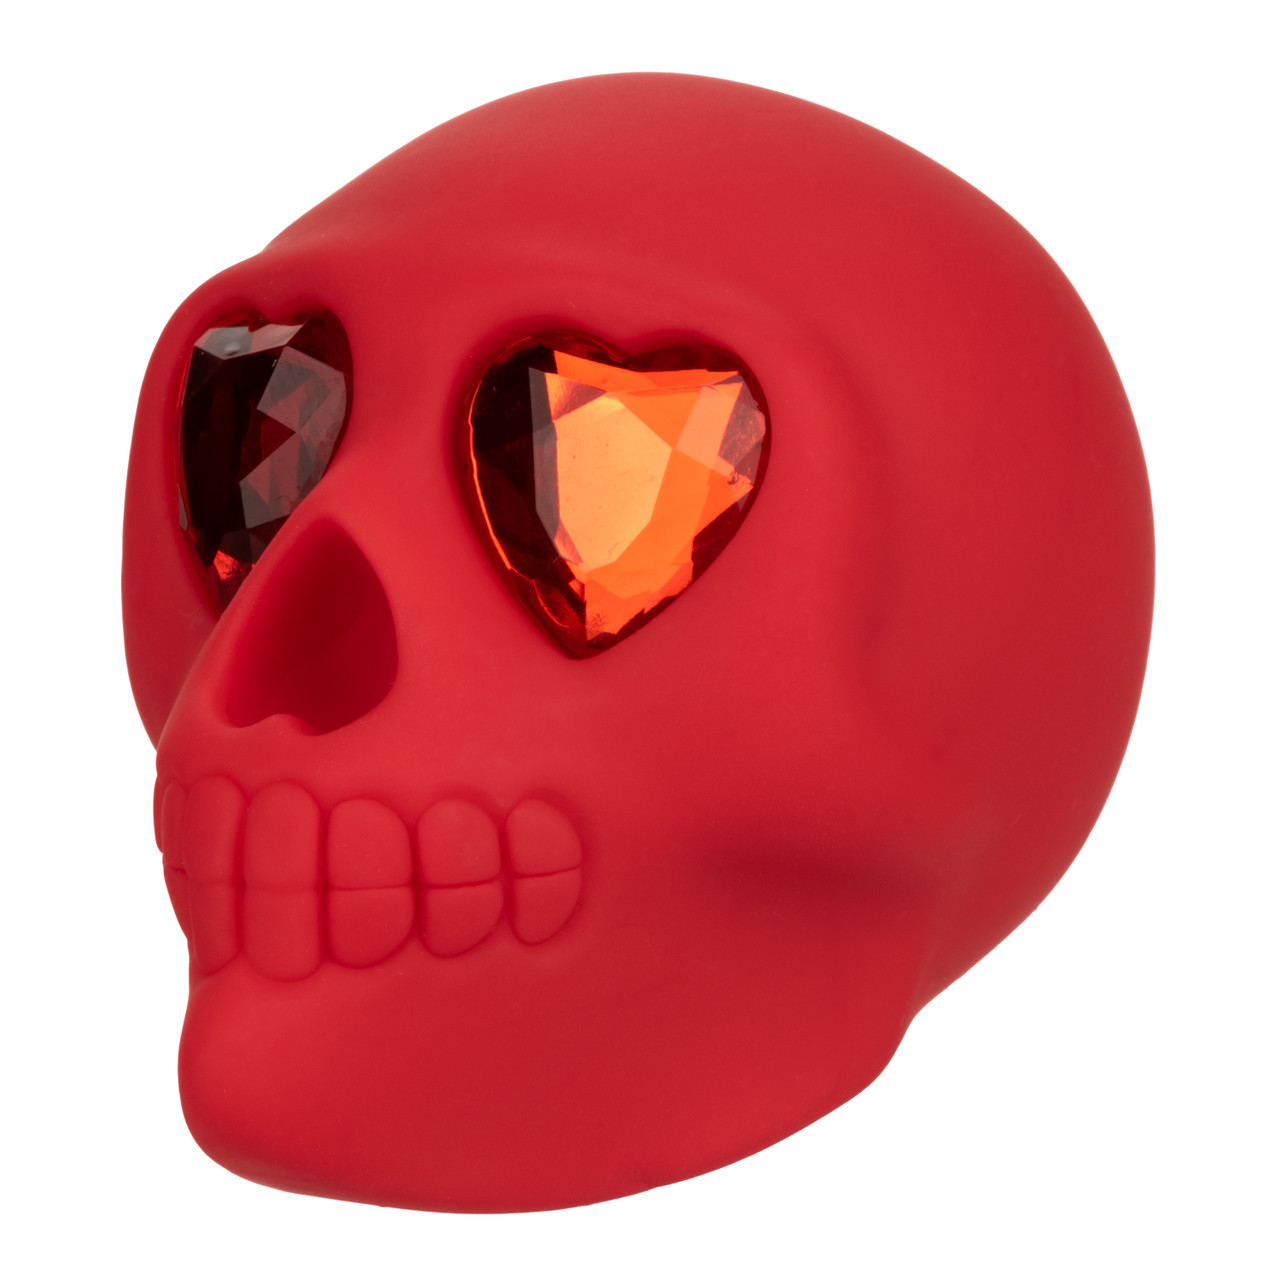 Мини-вибратор CalExotics Naughty Bits Bone Head, красный